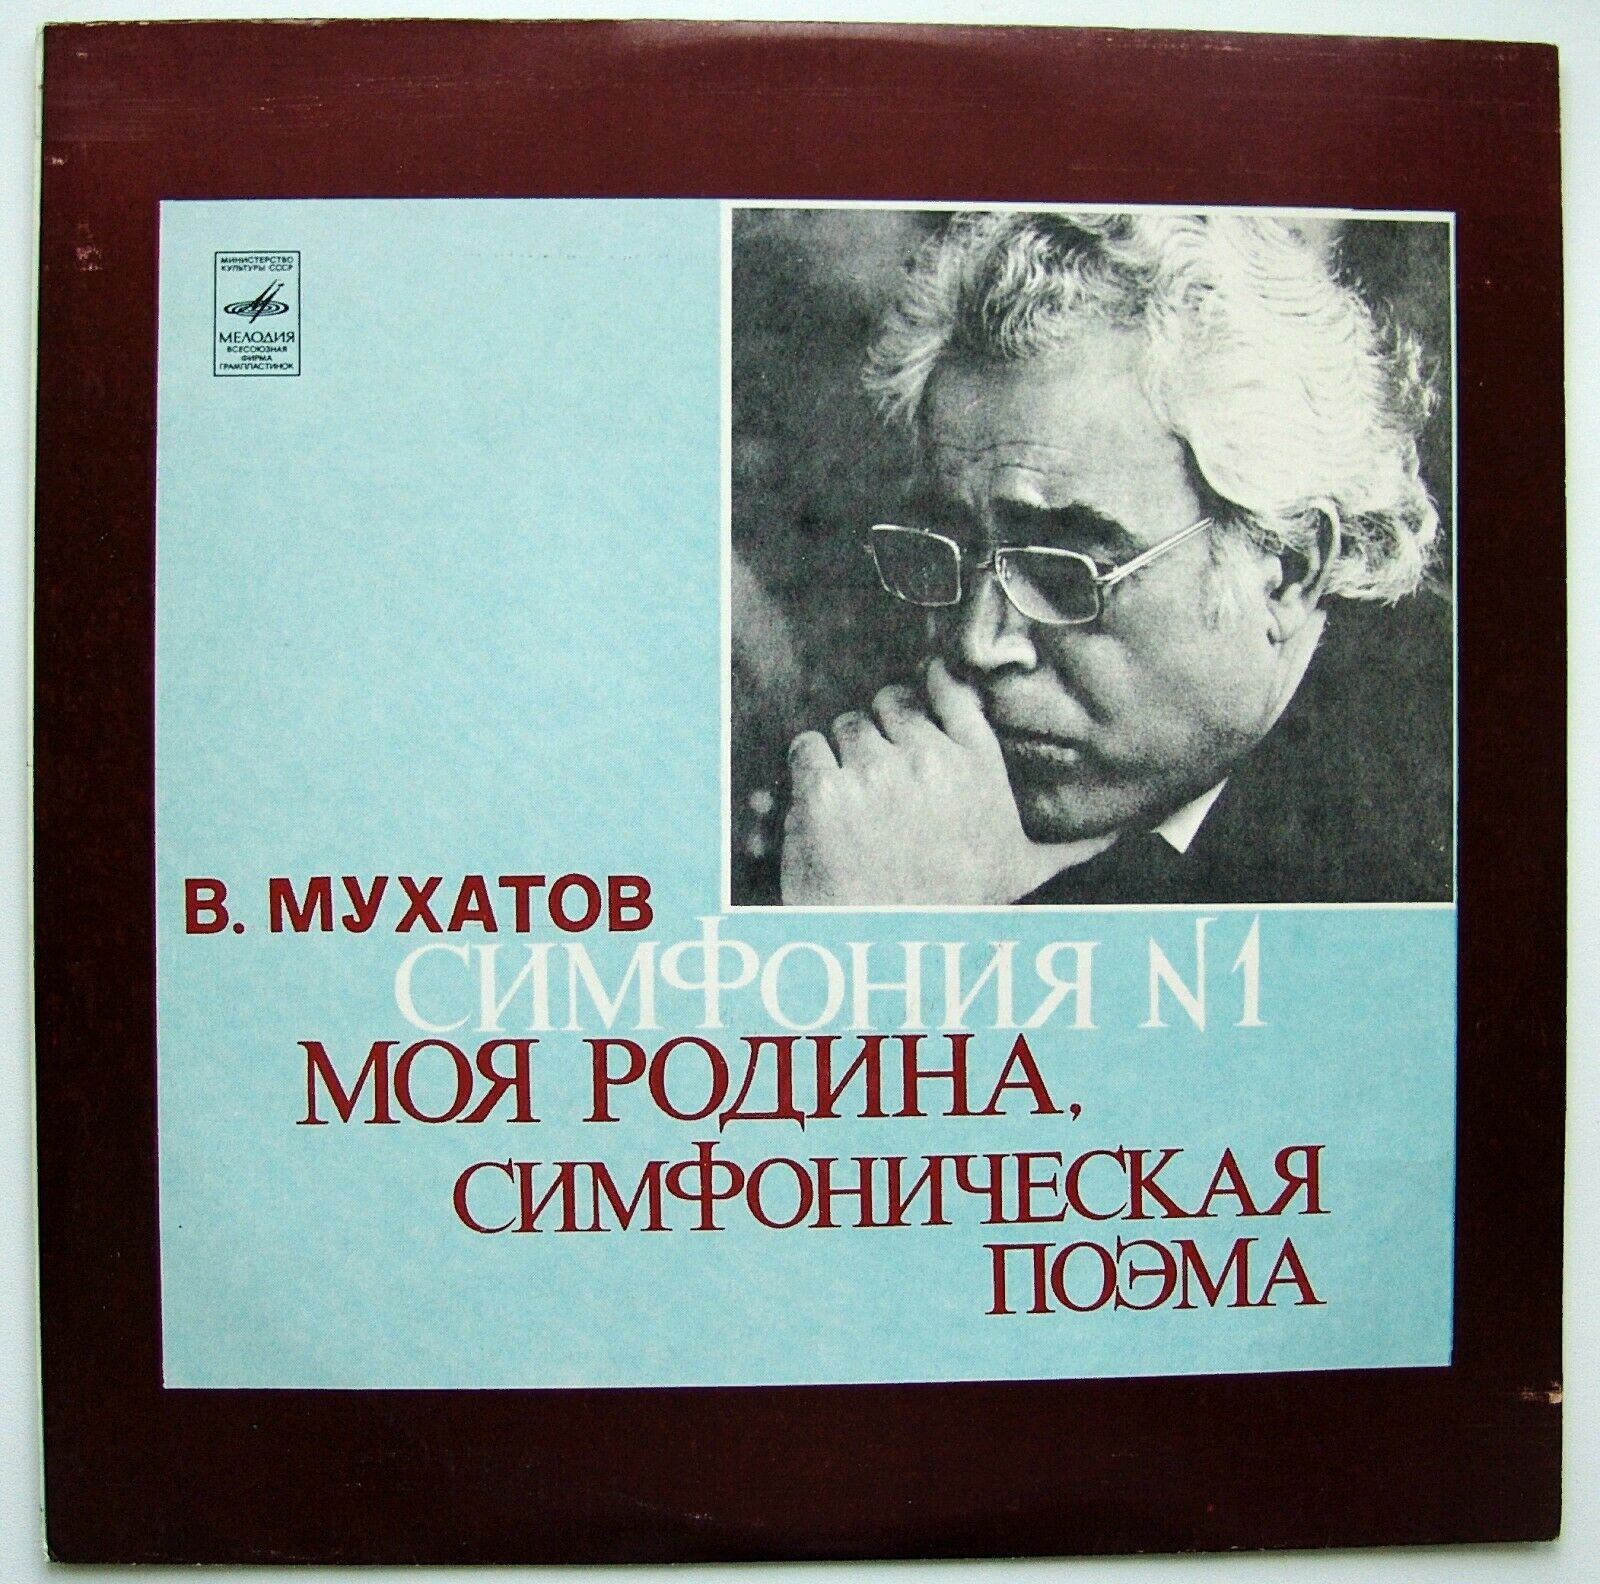 B. МУХАТОВ (1916)